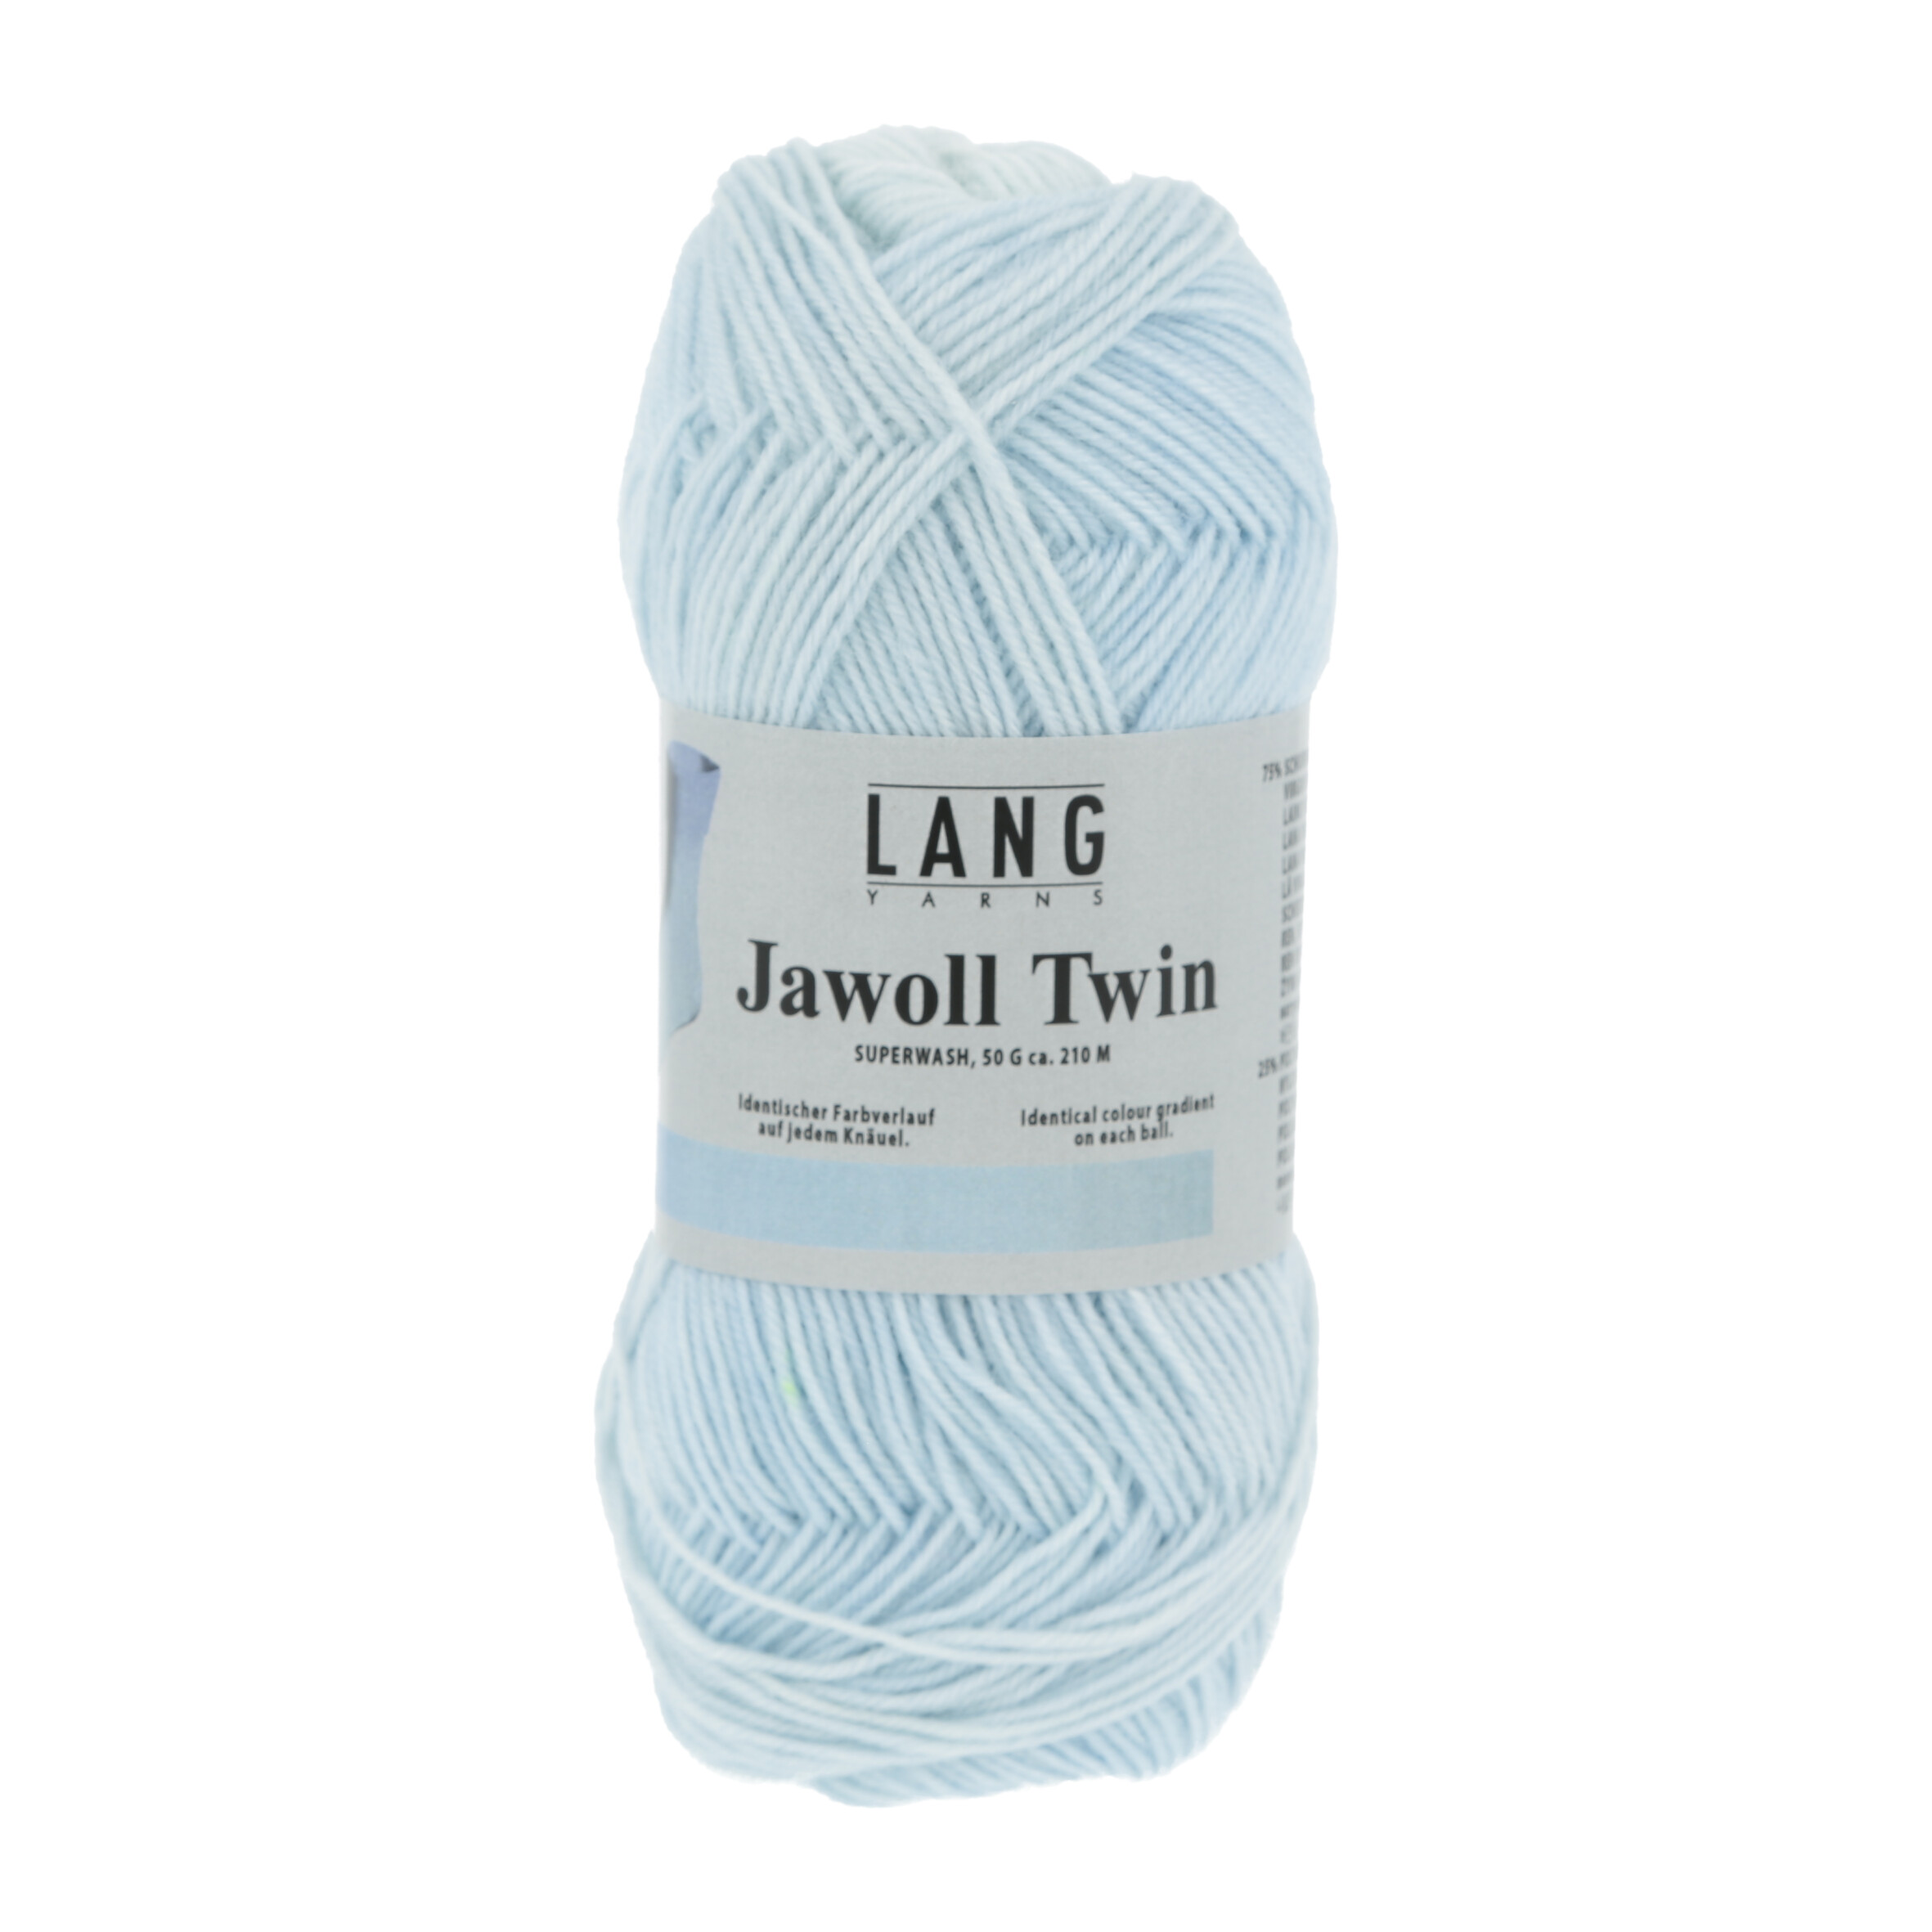 Jawoll Twin Strumpfgarn von Lang Yarns 0501 - hellblau/himmel